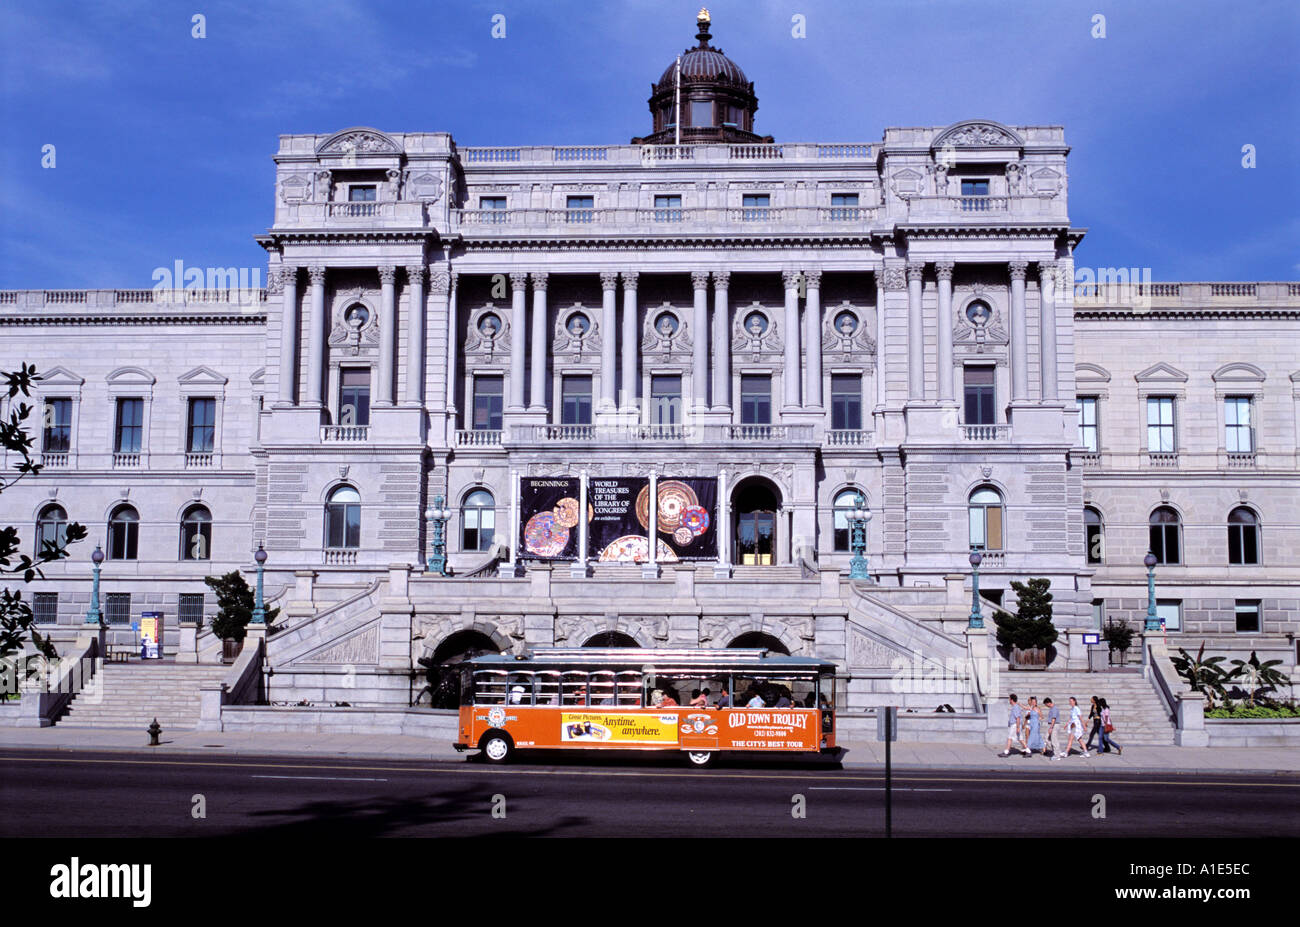 U.S. Library of Congress. Washington D.C. Stock Photo